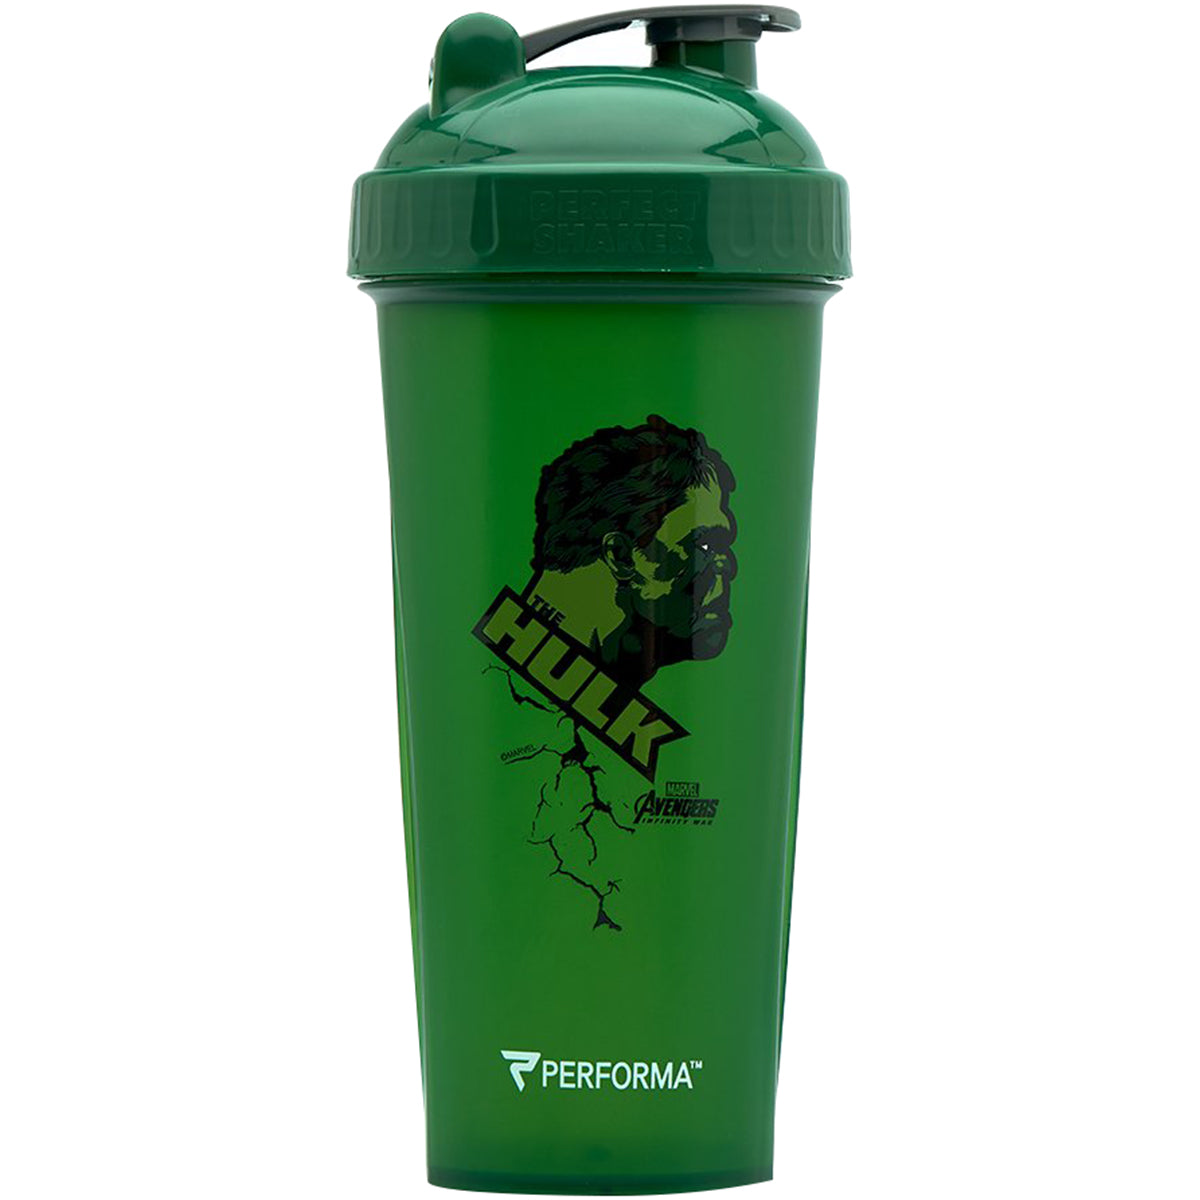 Performa PerfectShaker Avengers Infinity War Shaker Cup Bottle - The Hulk PerfectShaker